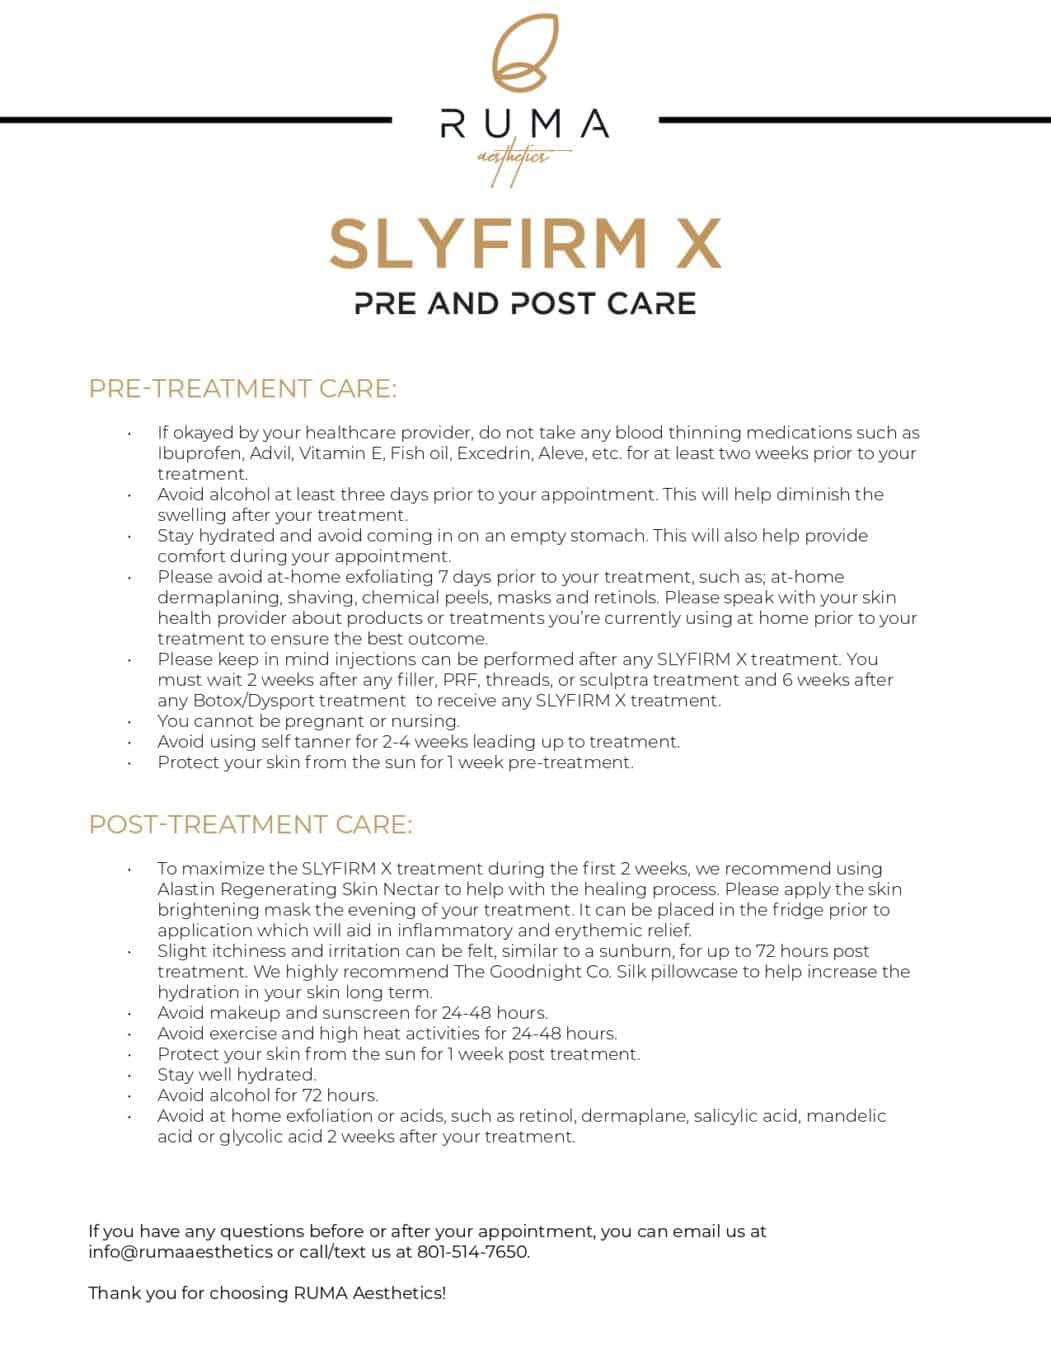 SLYFIRM X pre post care